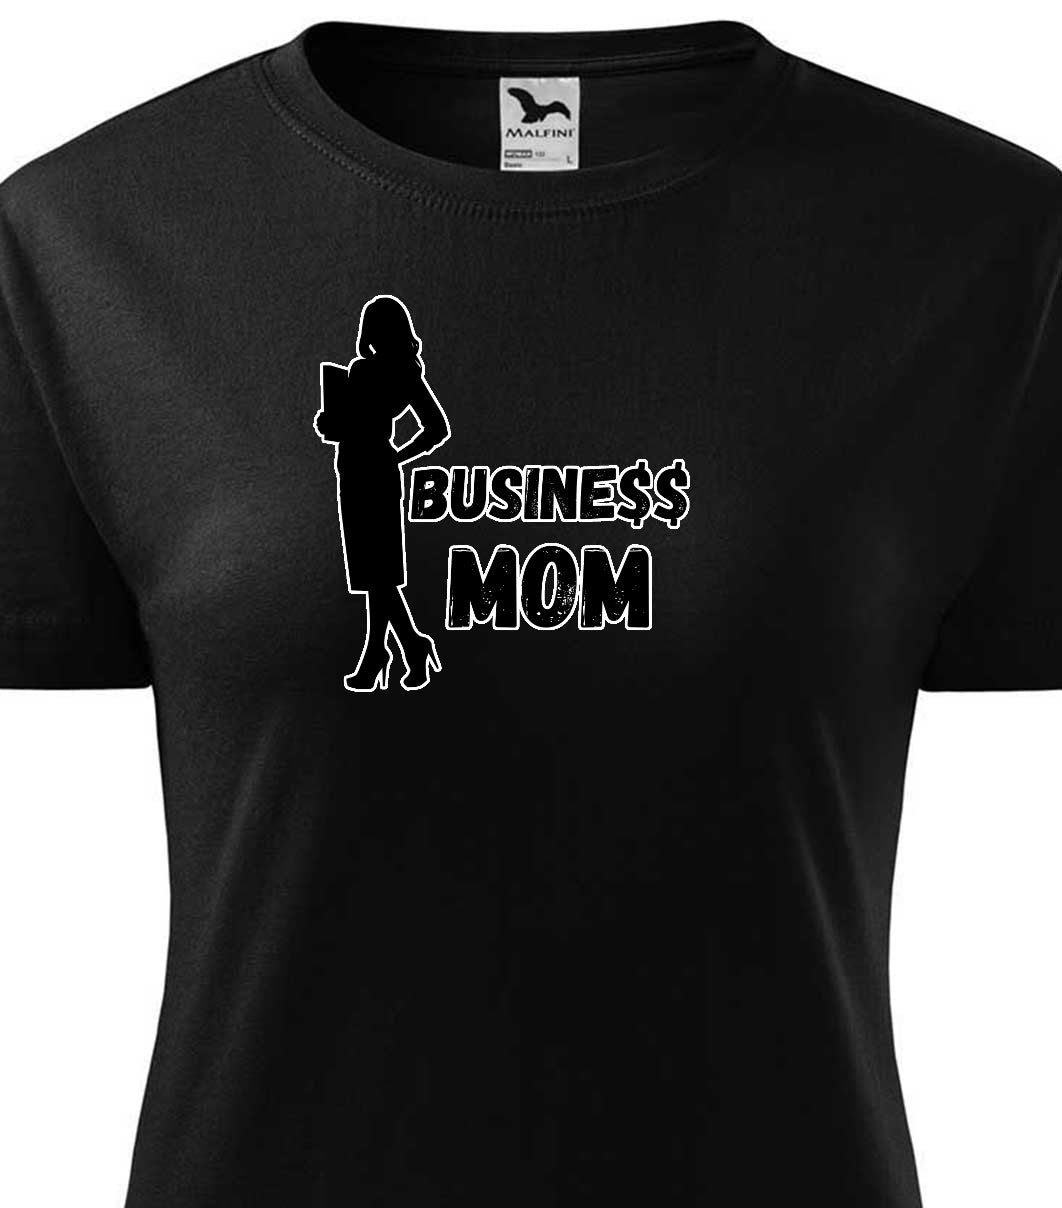 Business Mom női technikai póló